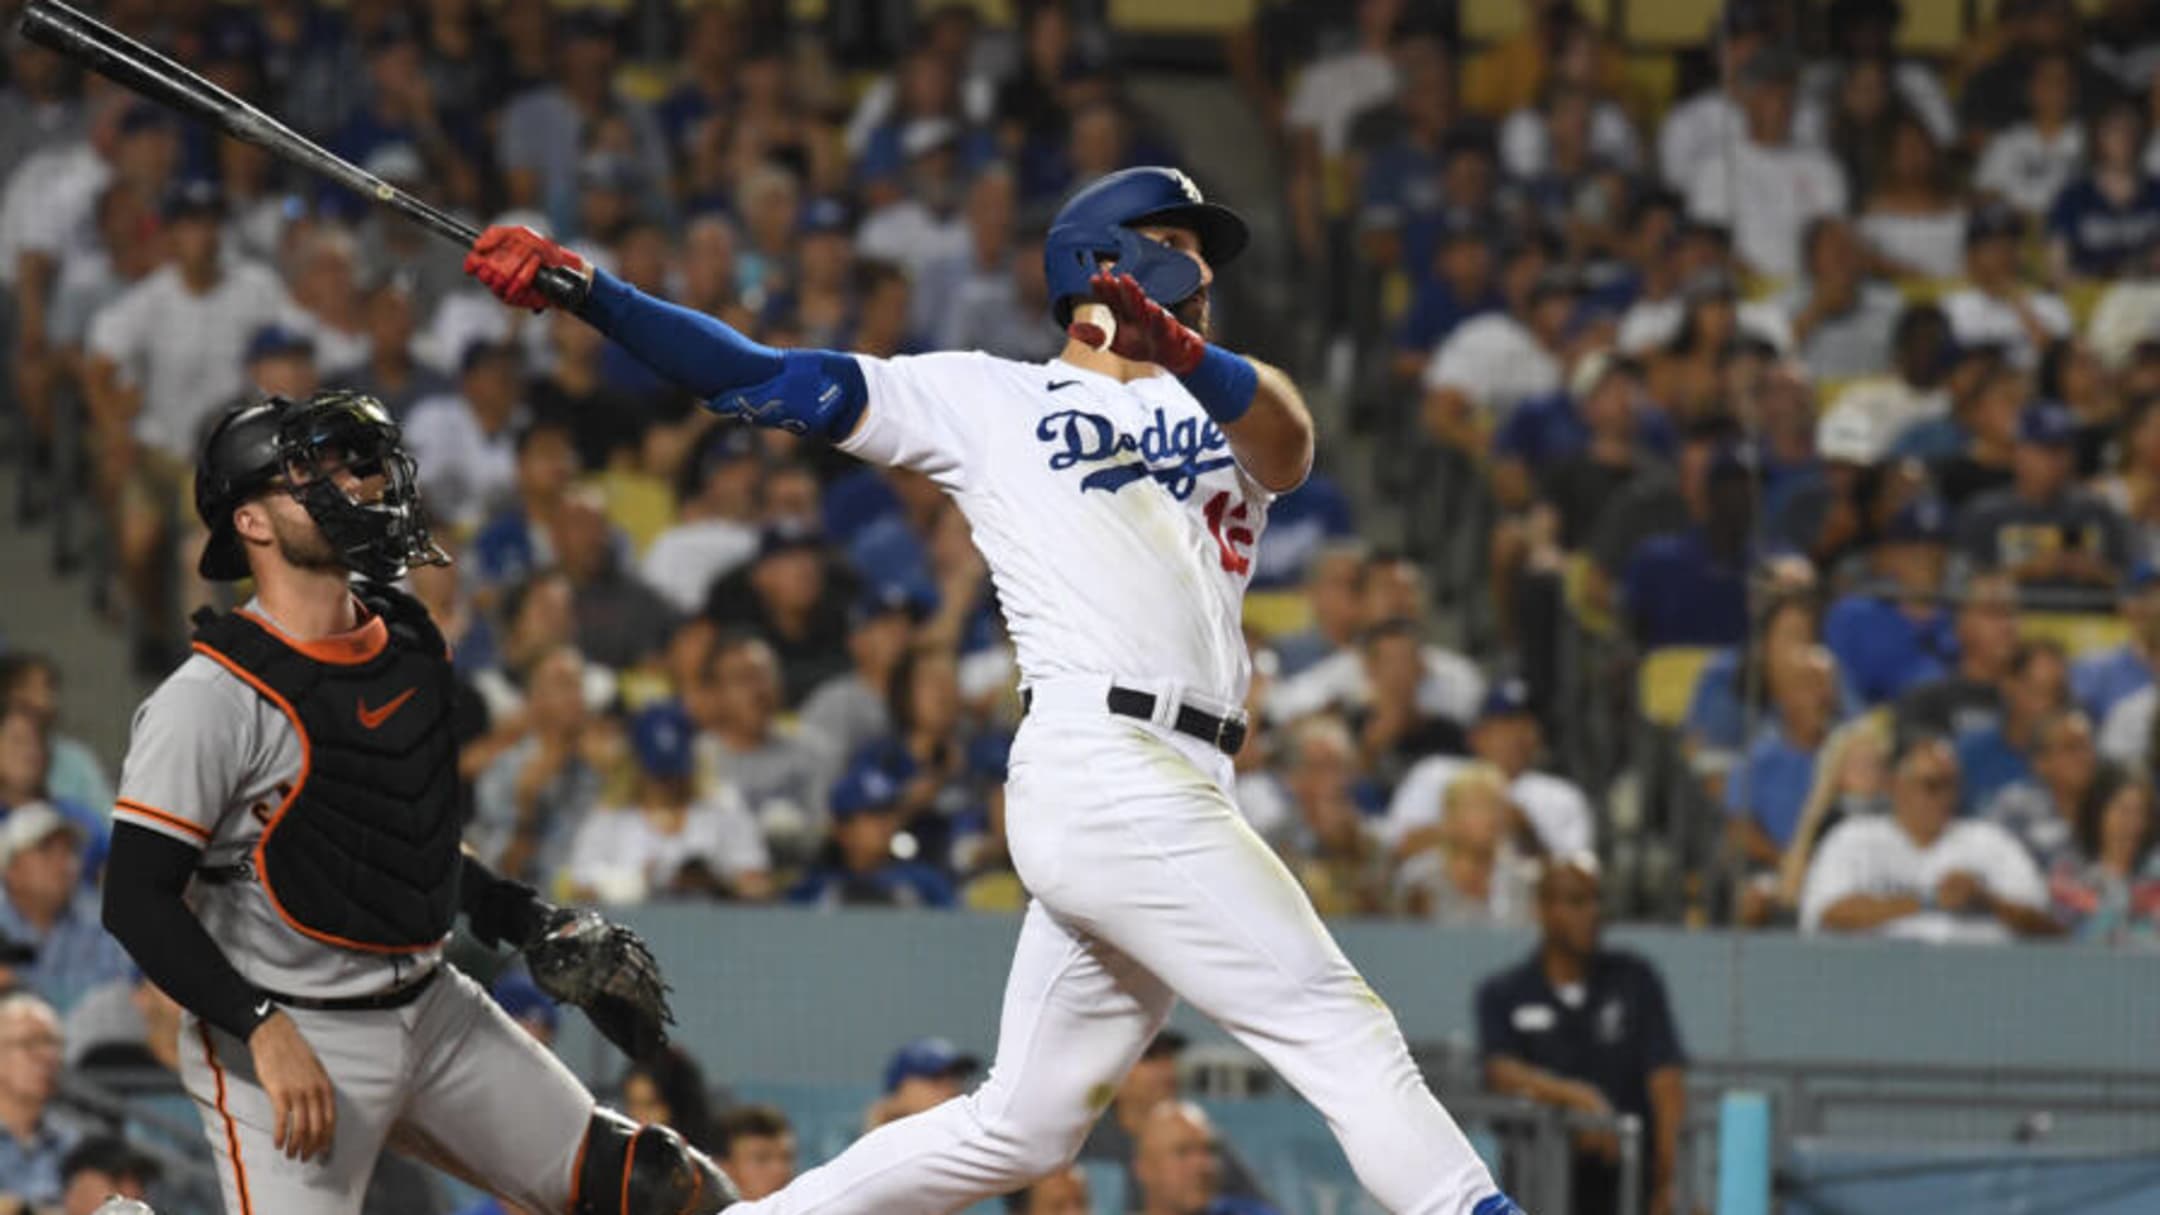 Dodgers vs. Padres recap: Craig Kimbrel walks in winning run in